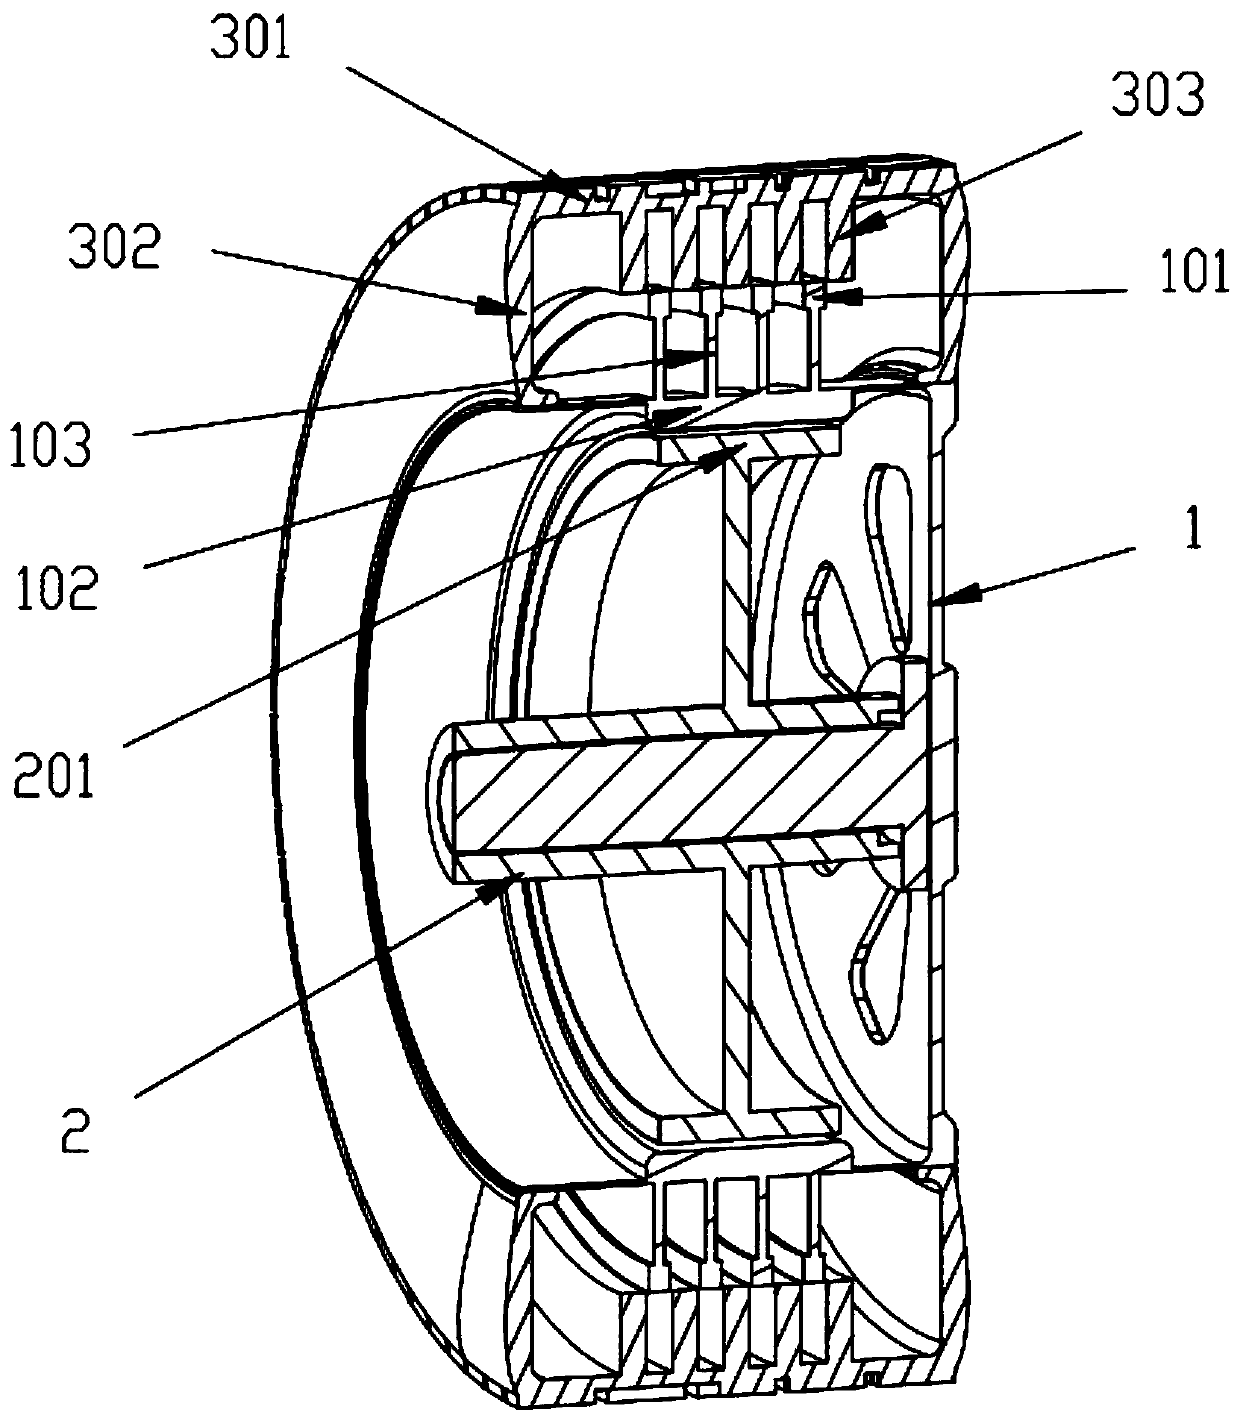 Single-side hub motor based on power generation tire